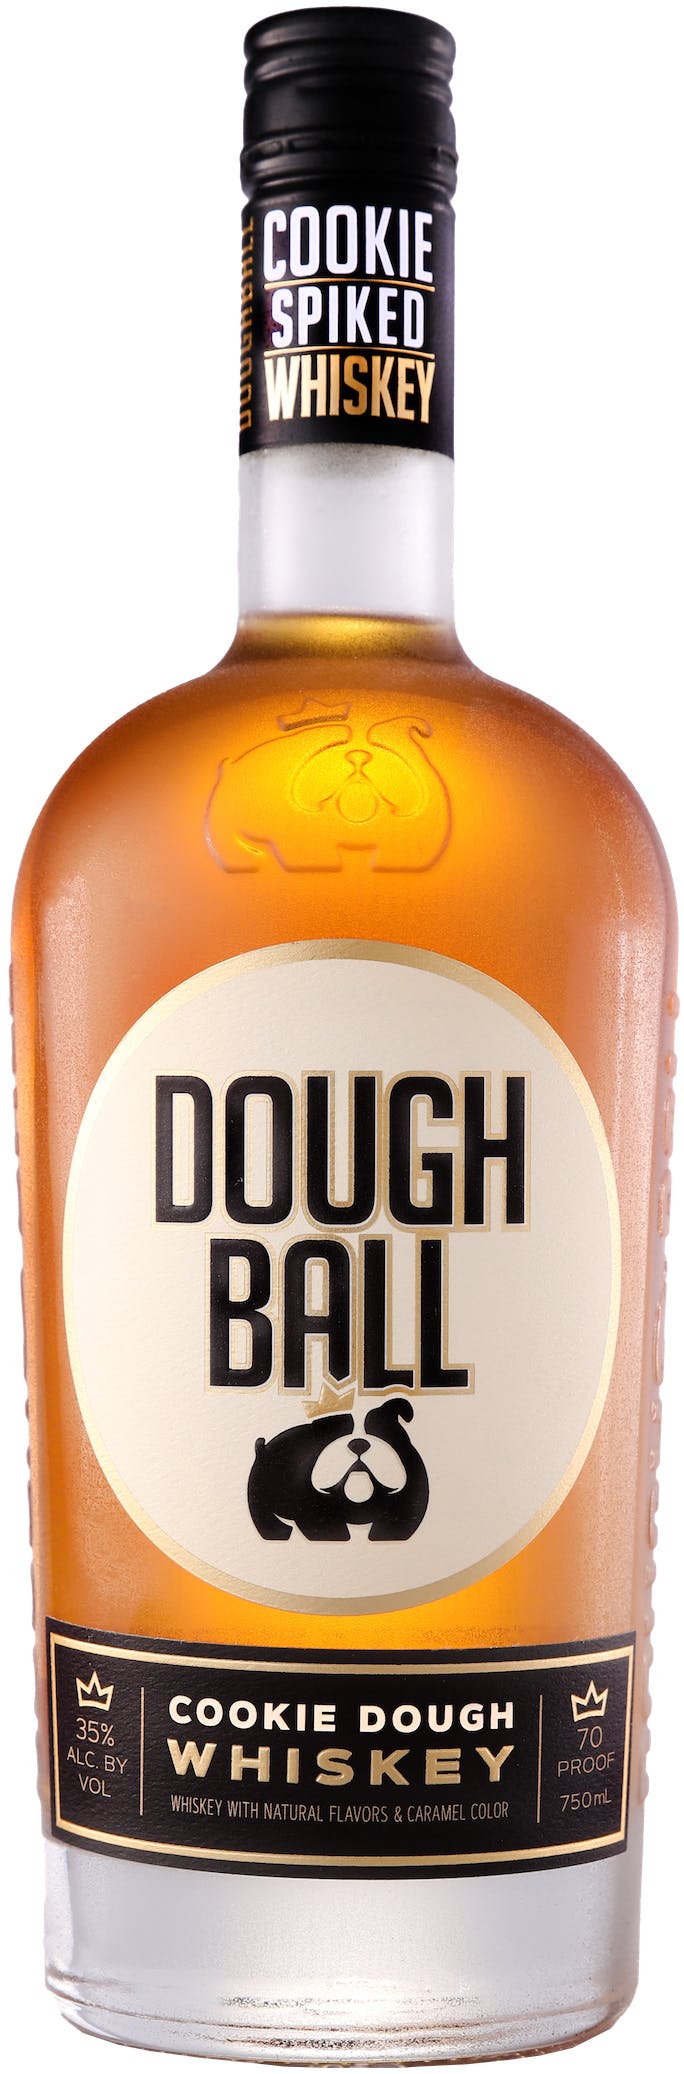 The Original Whiskey Ball (4 Pack)